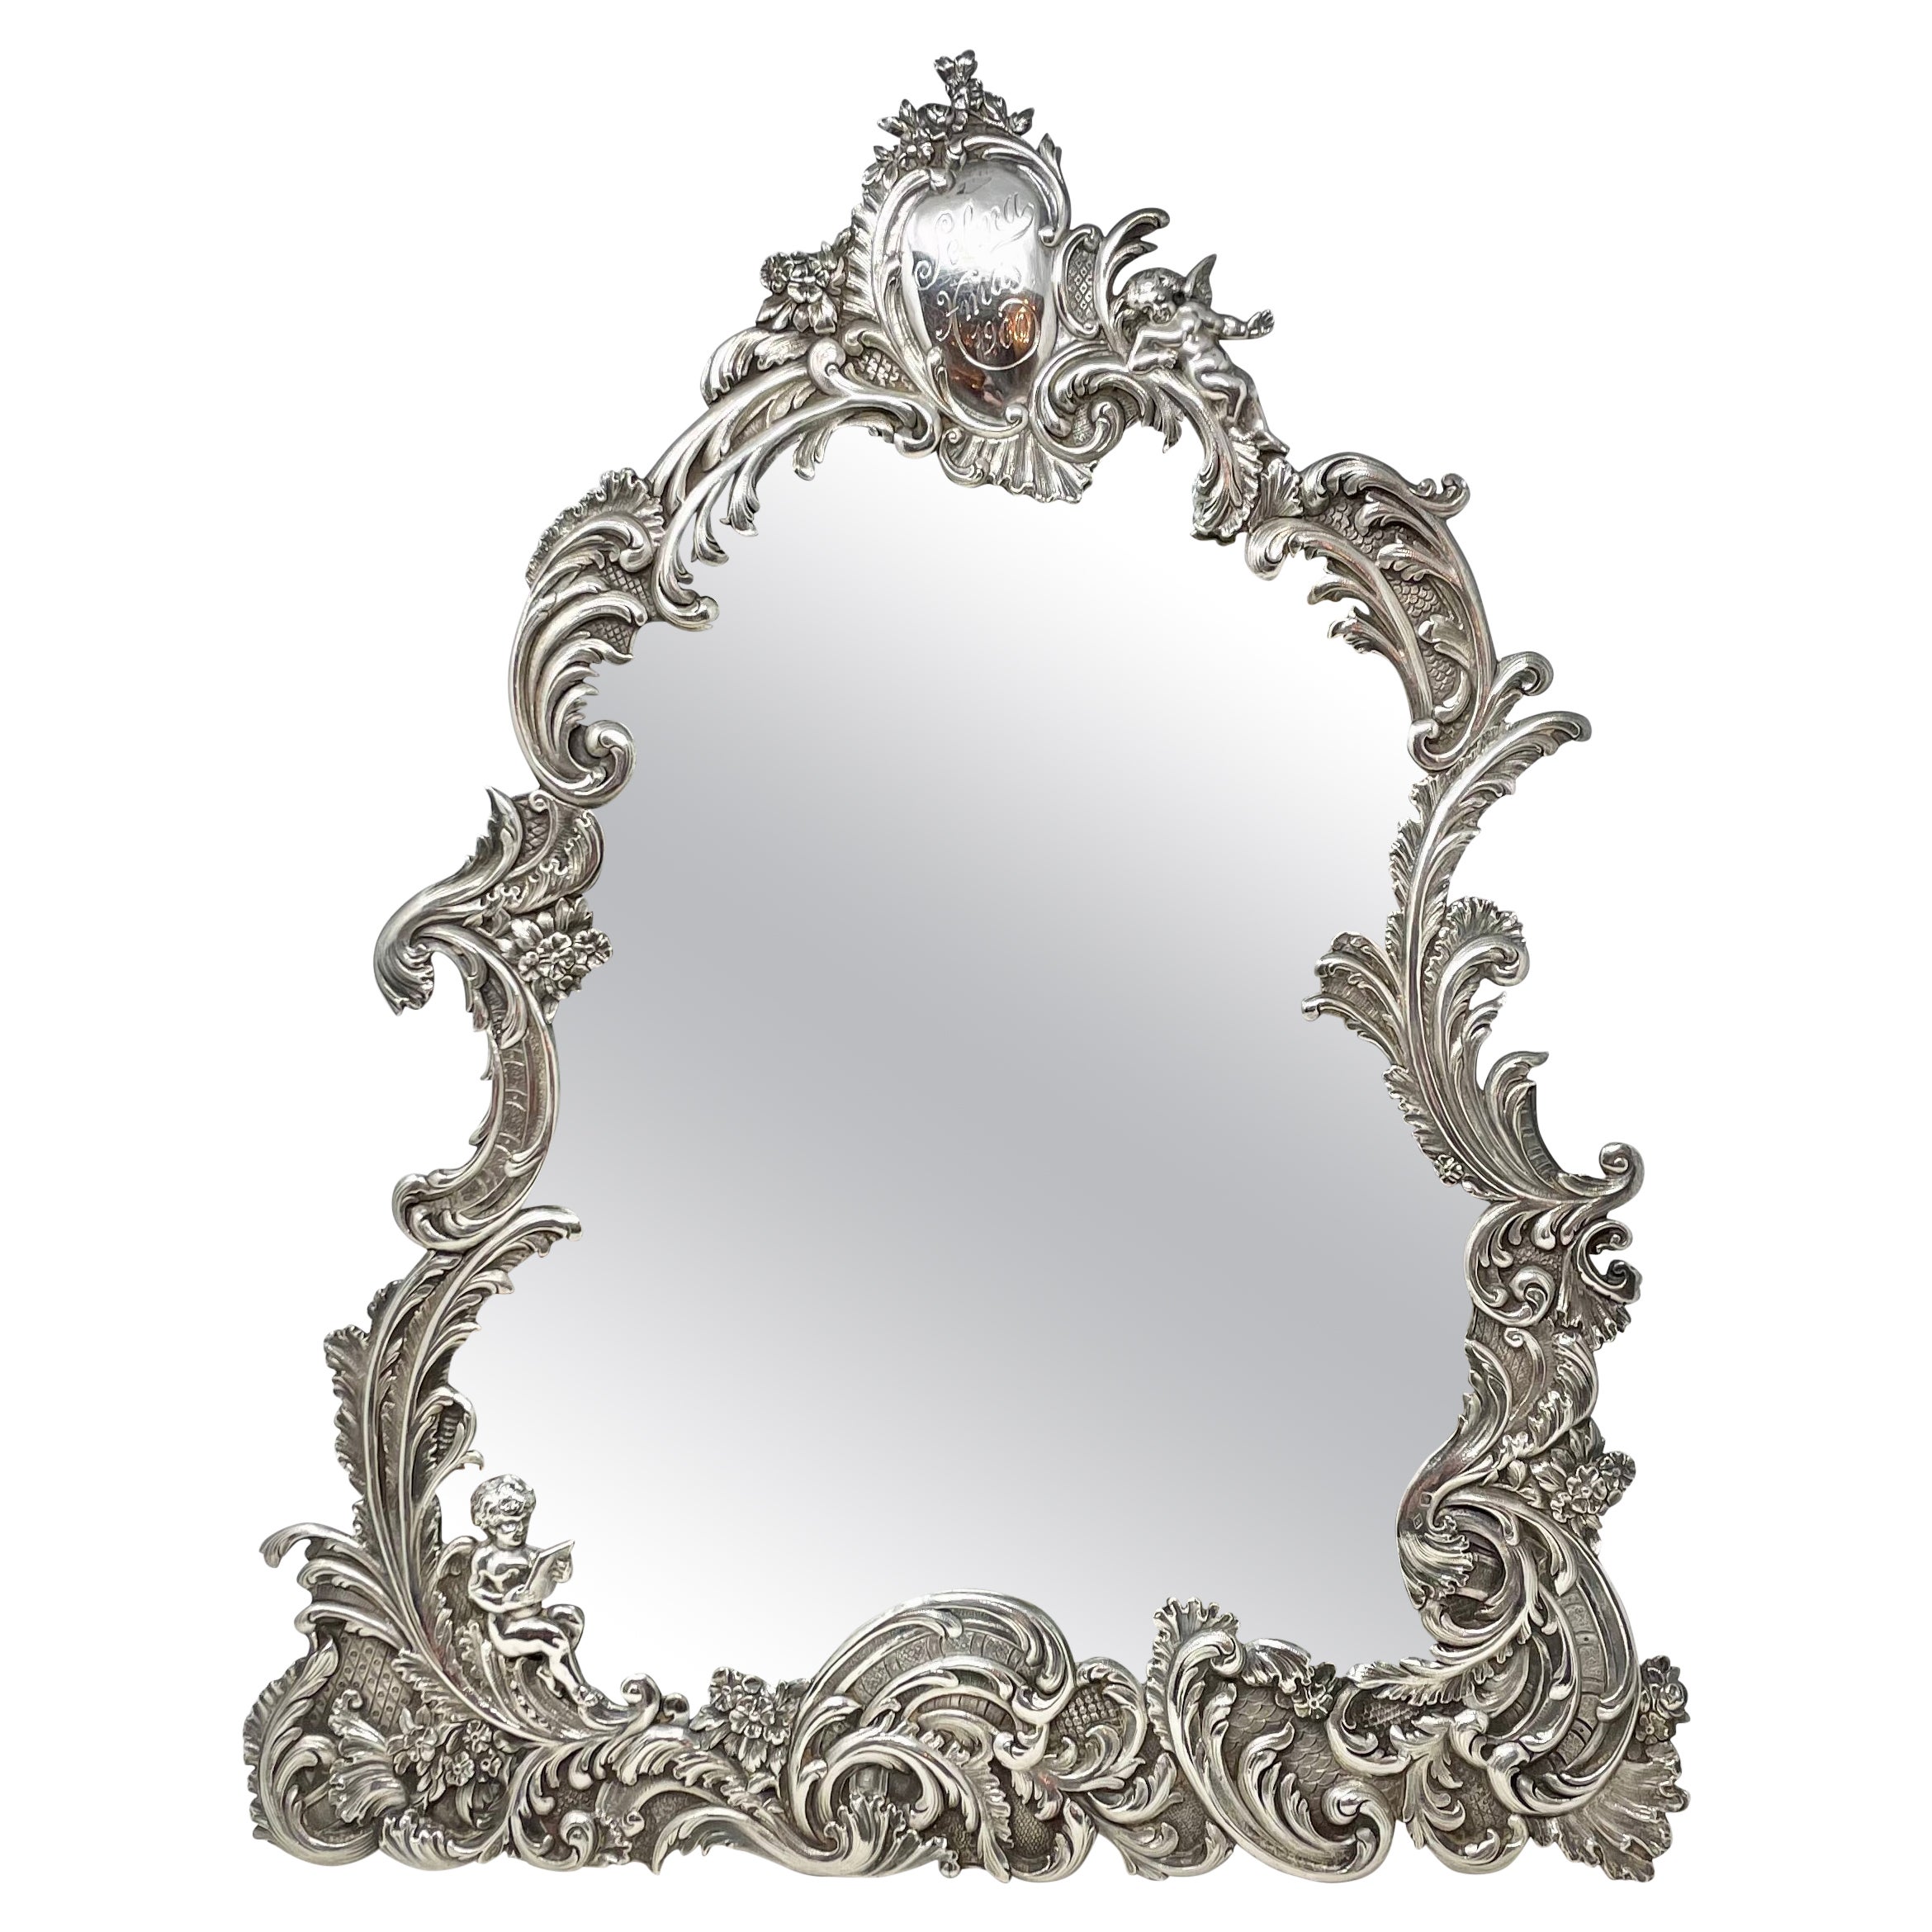 Antique American "Tiffany & Co." Silvered Bronze Dressing Mirror, Circa 1900's